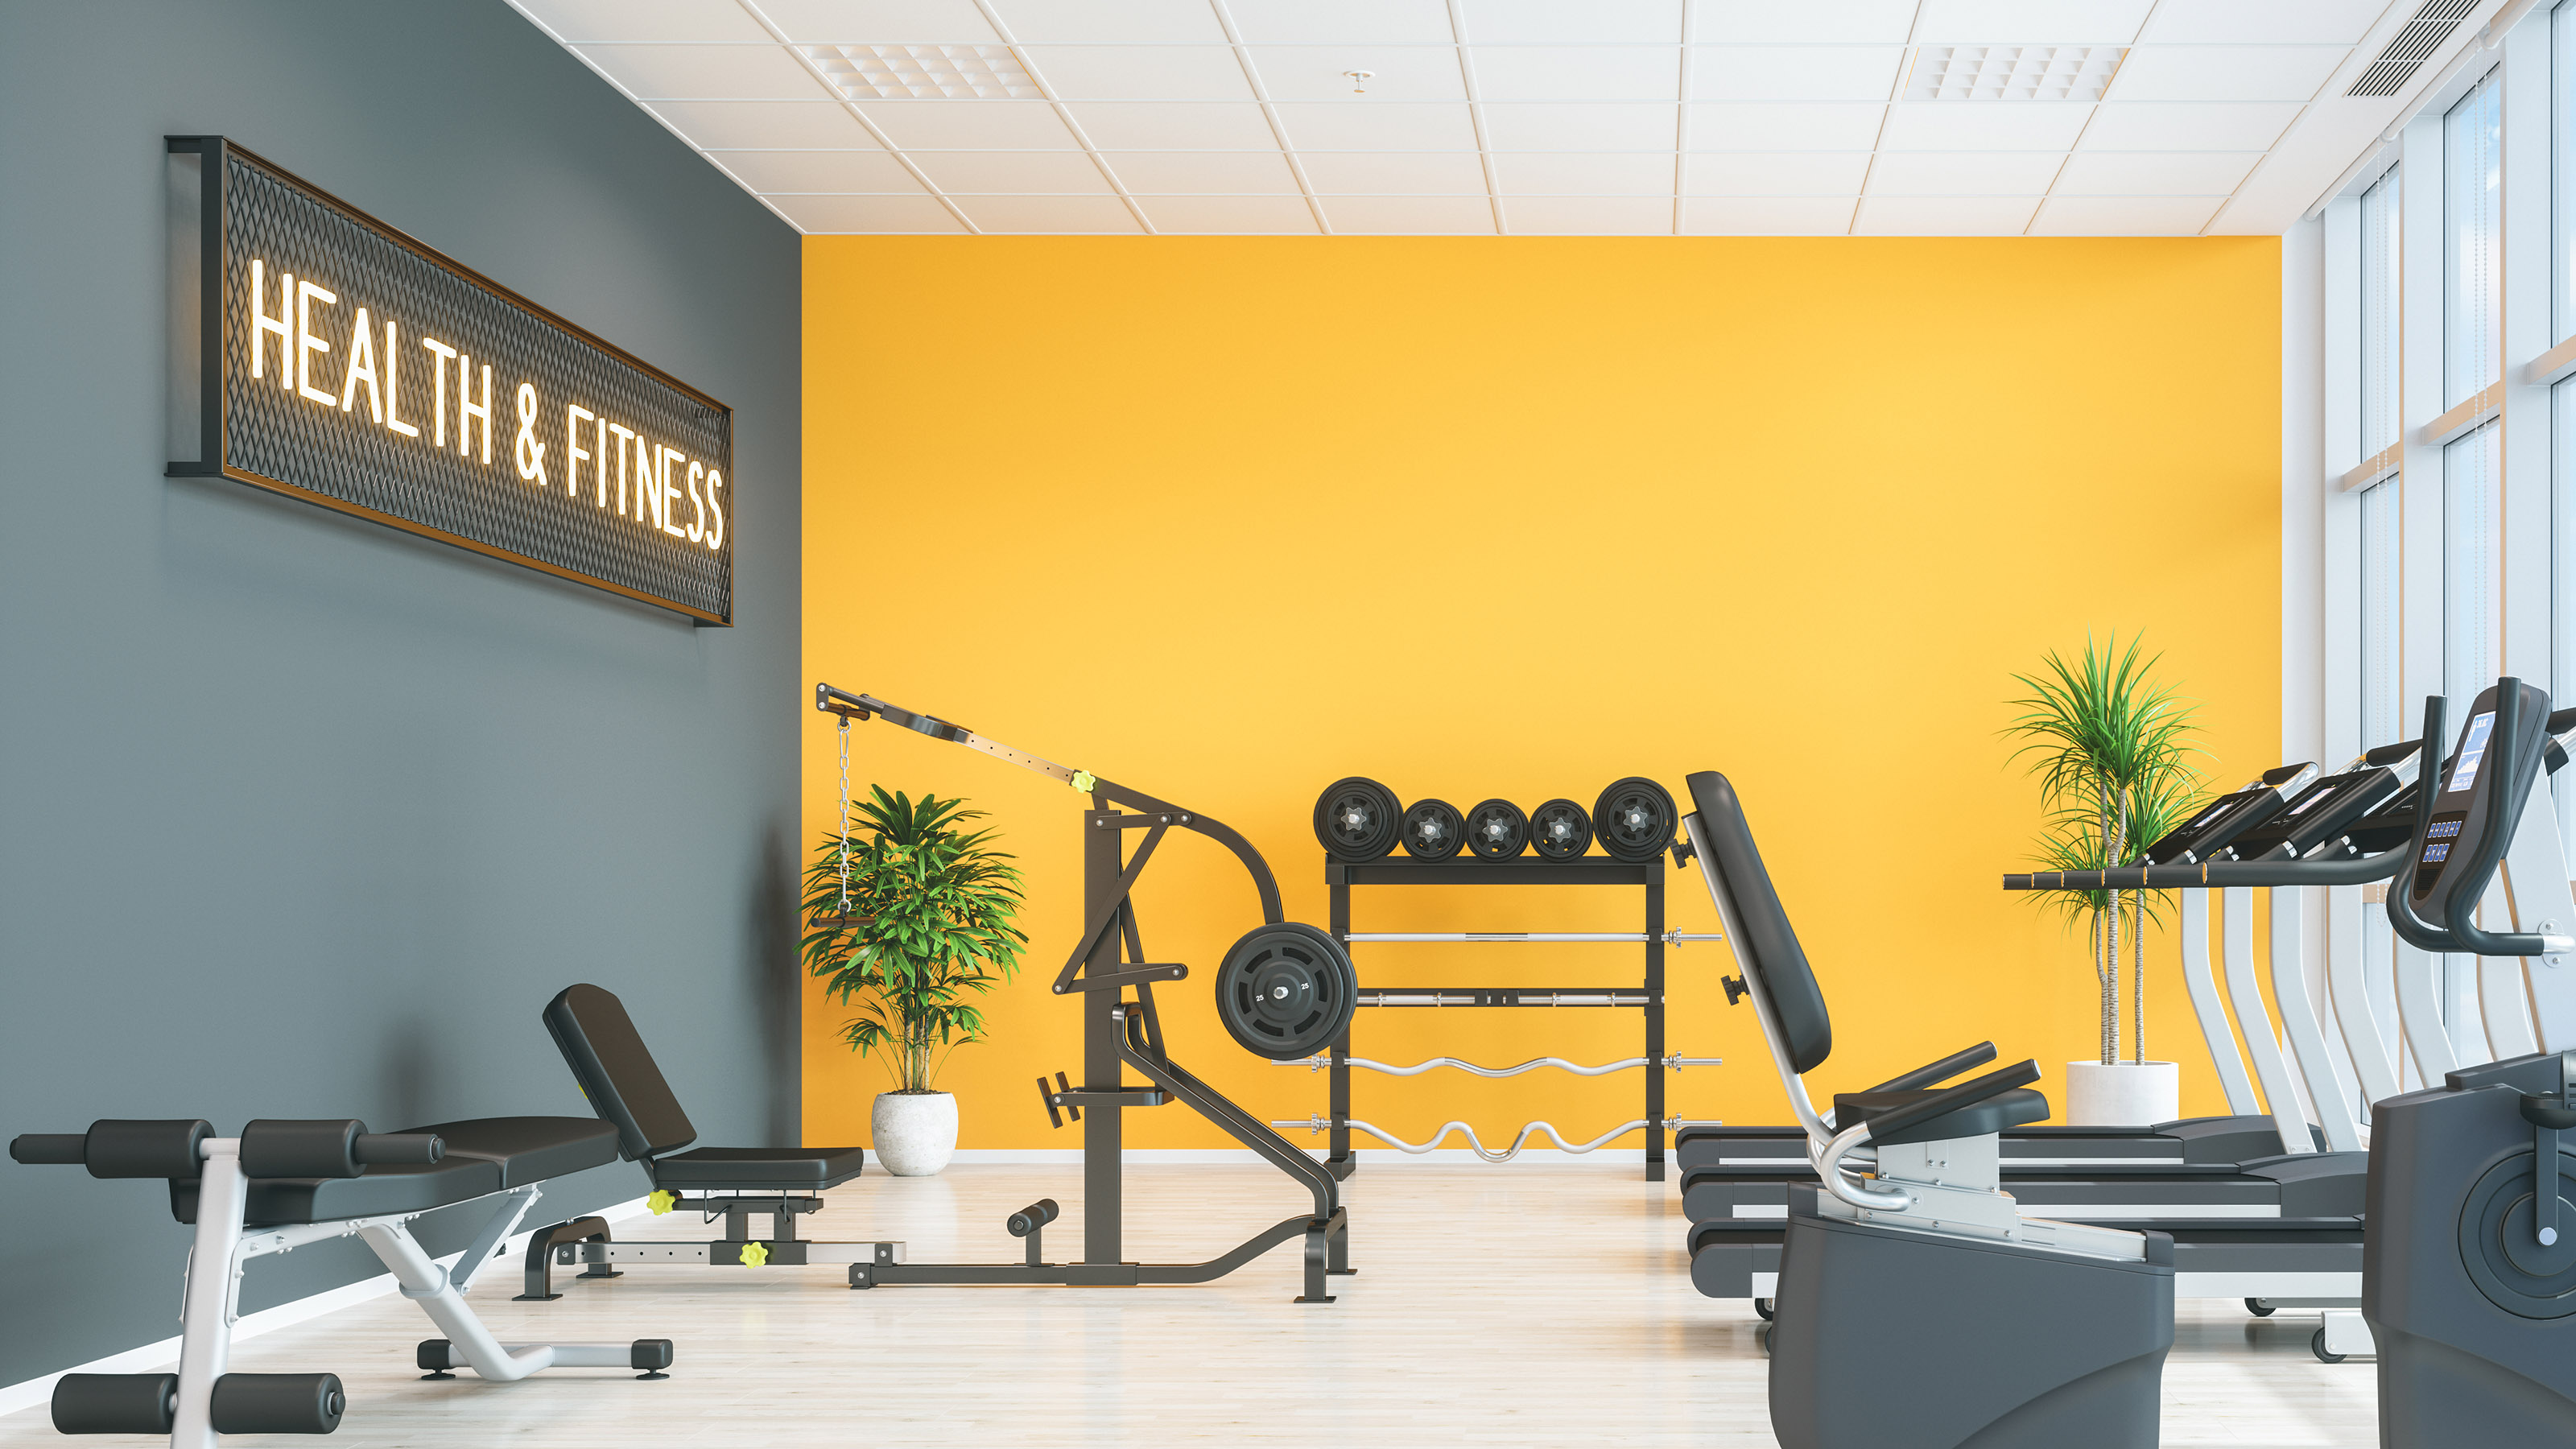 Home gym wall decor ideas – 18 motivational wall art looks   Real ...